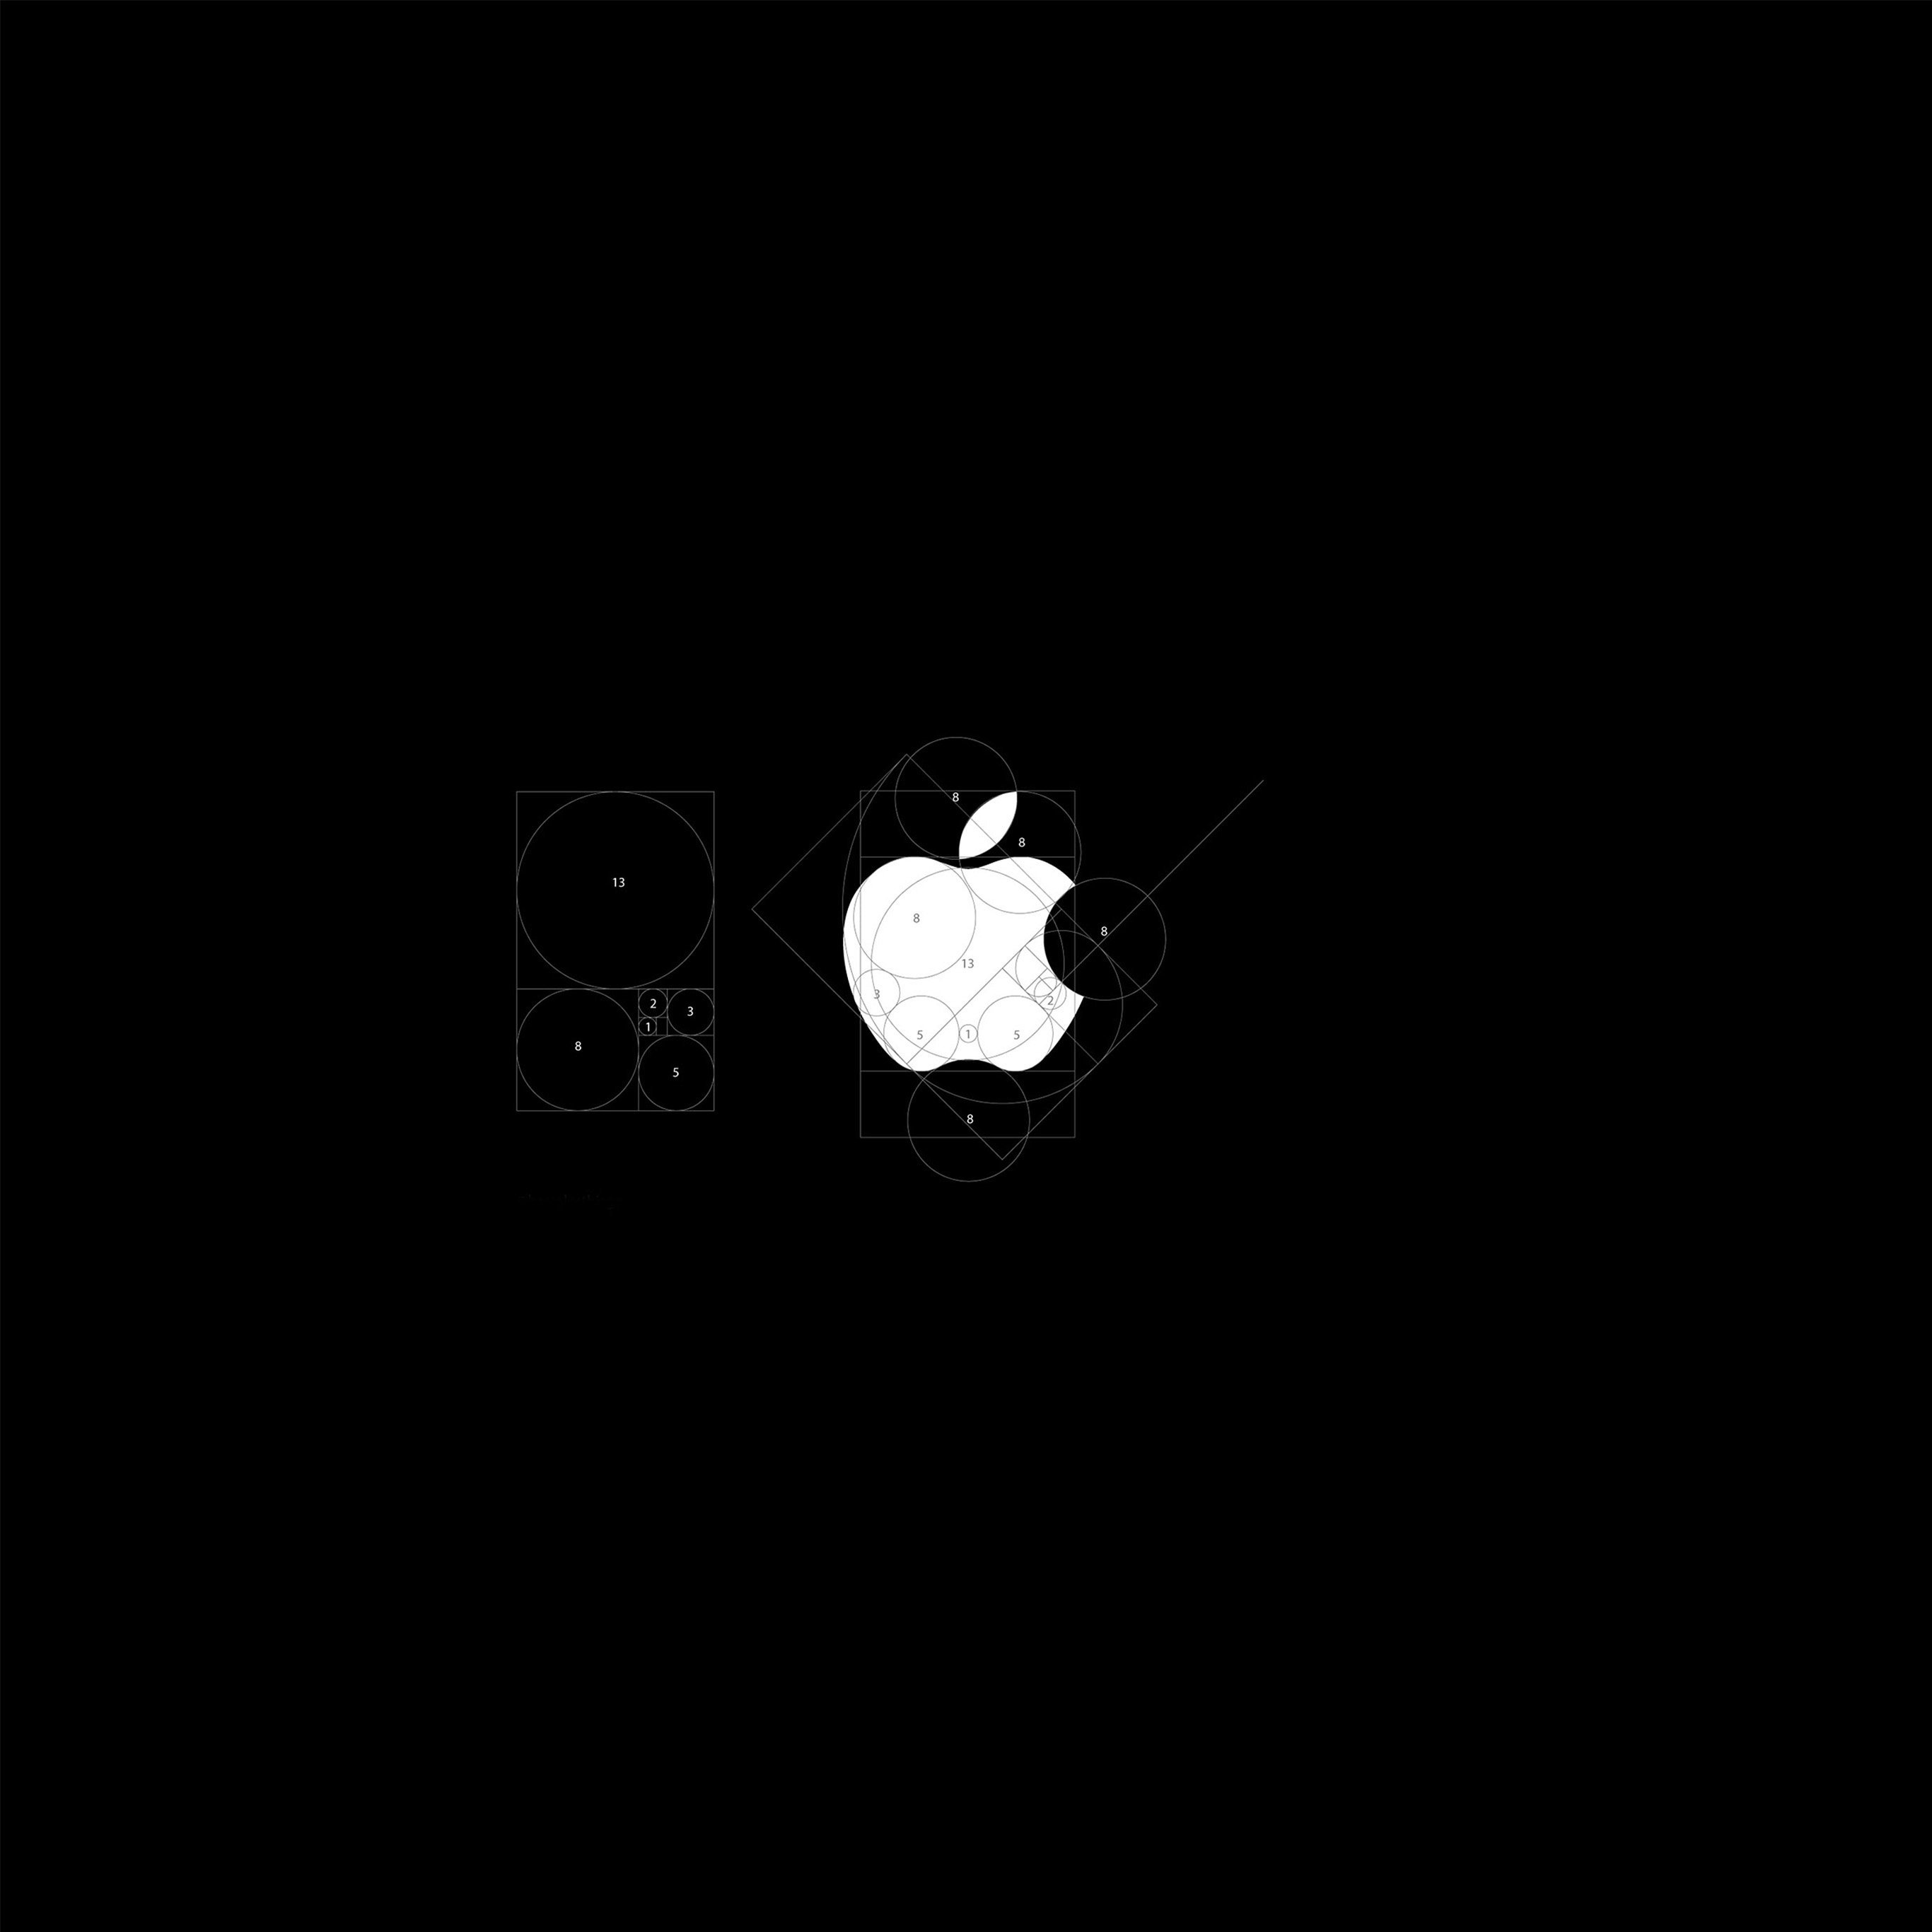 Телефон включается логотипа. Apple на черном фоне. Логотип Apple на черном фоне. Яблоко айфона на черном фоне. Яблочко на черном фоне.